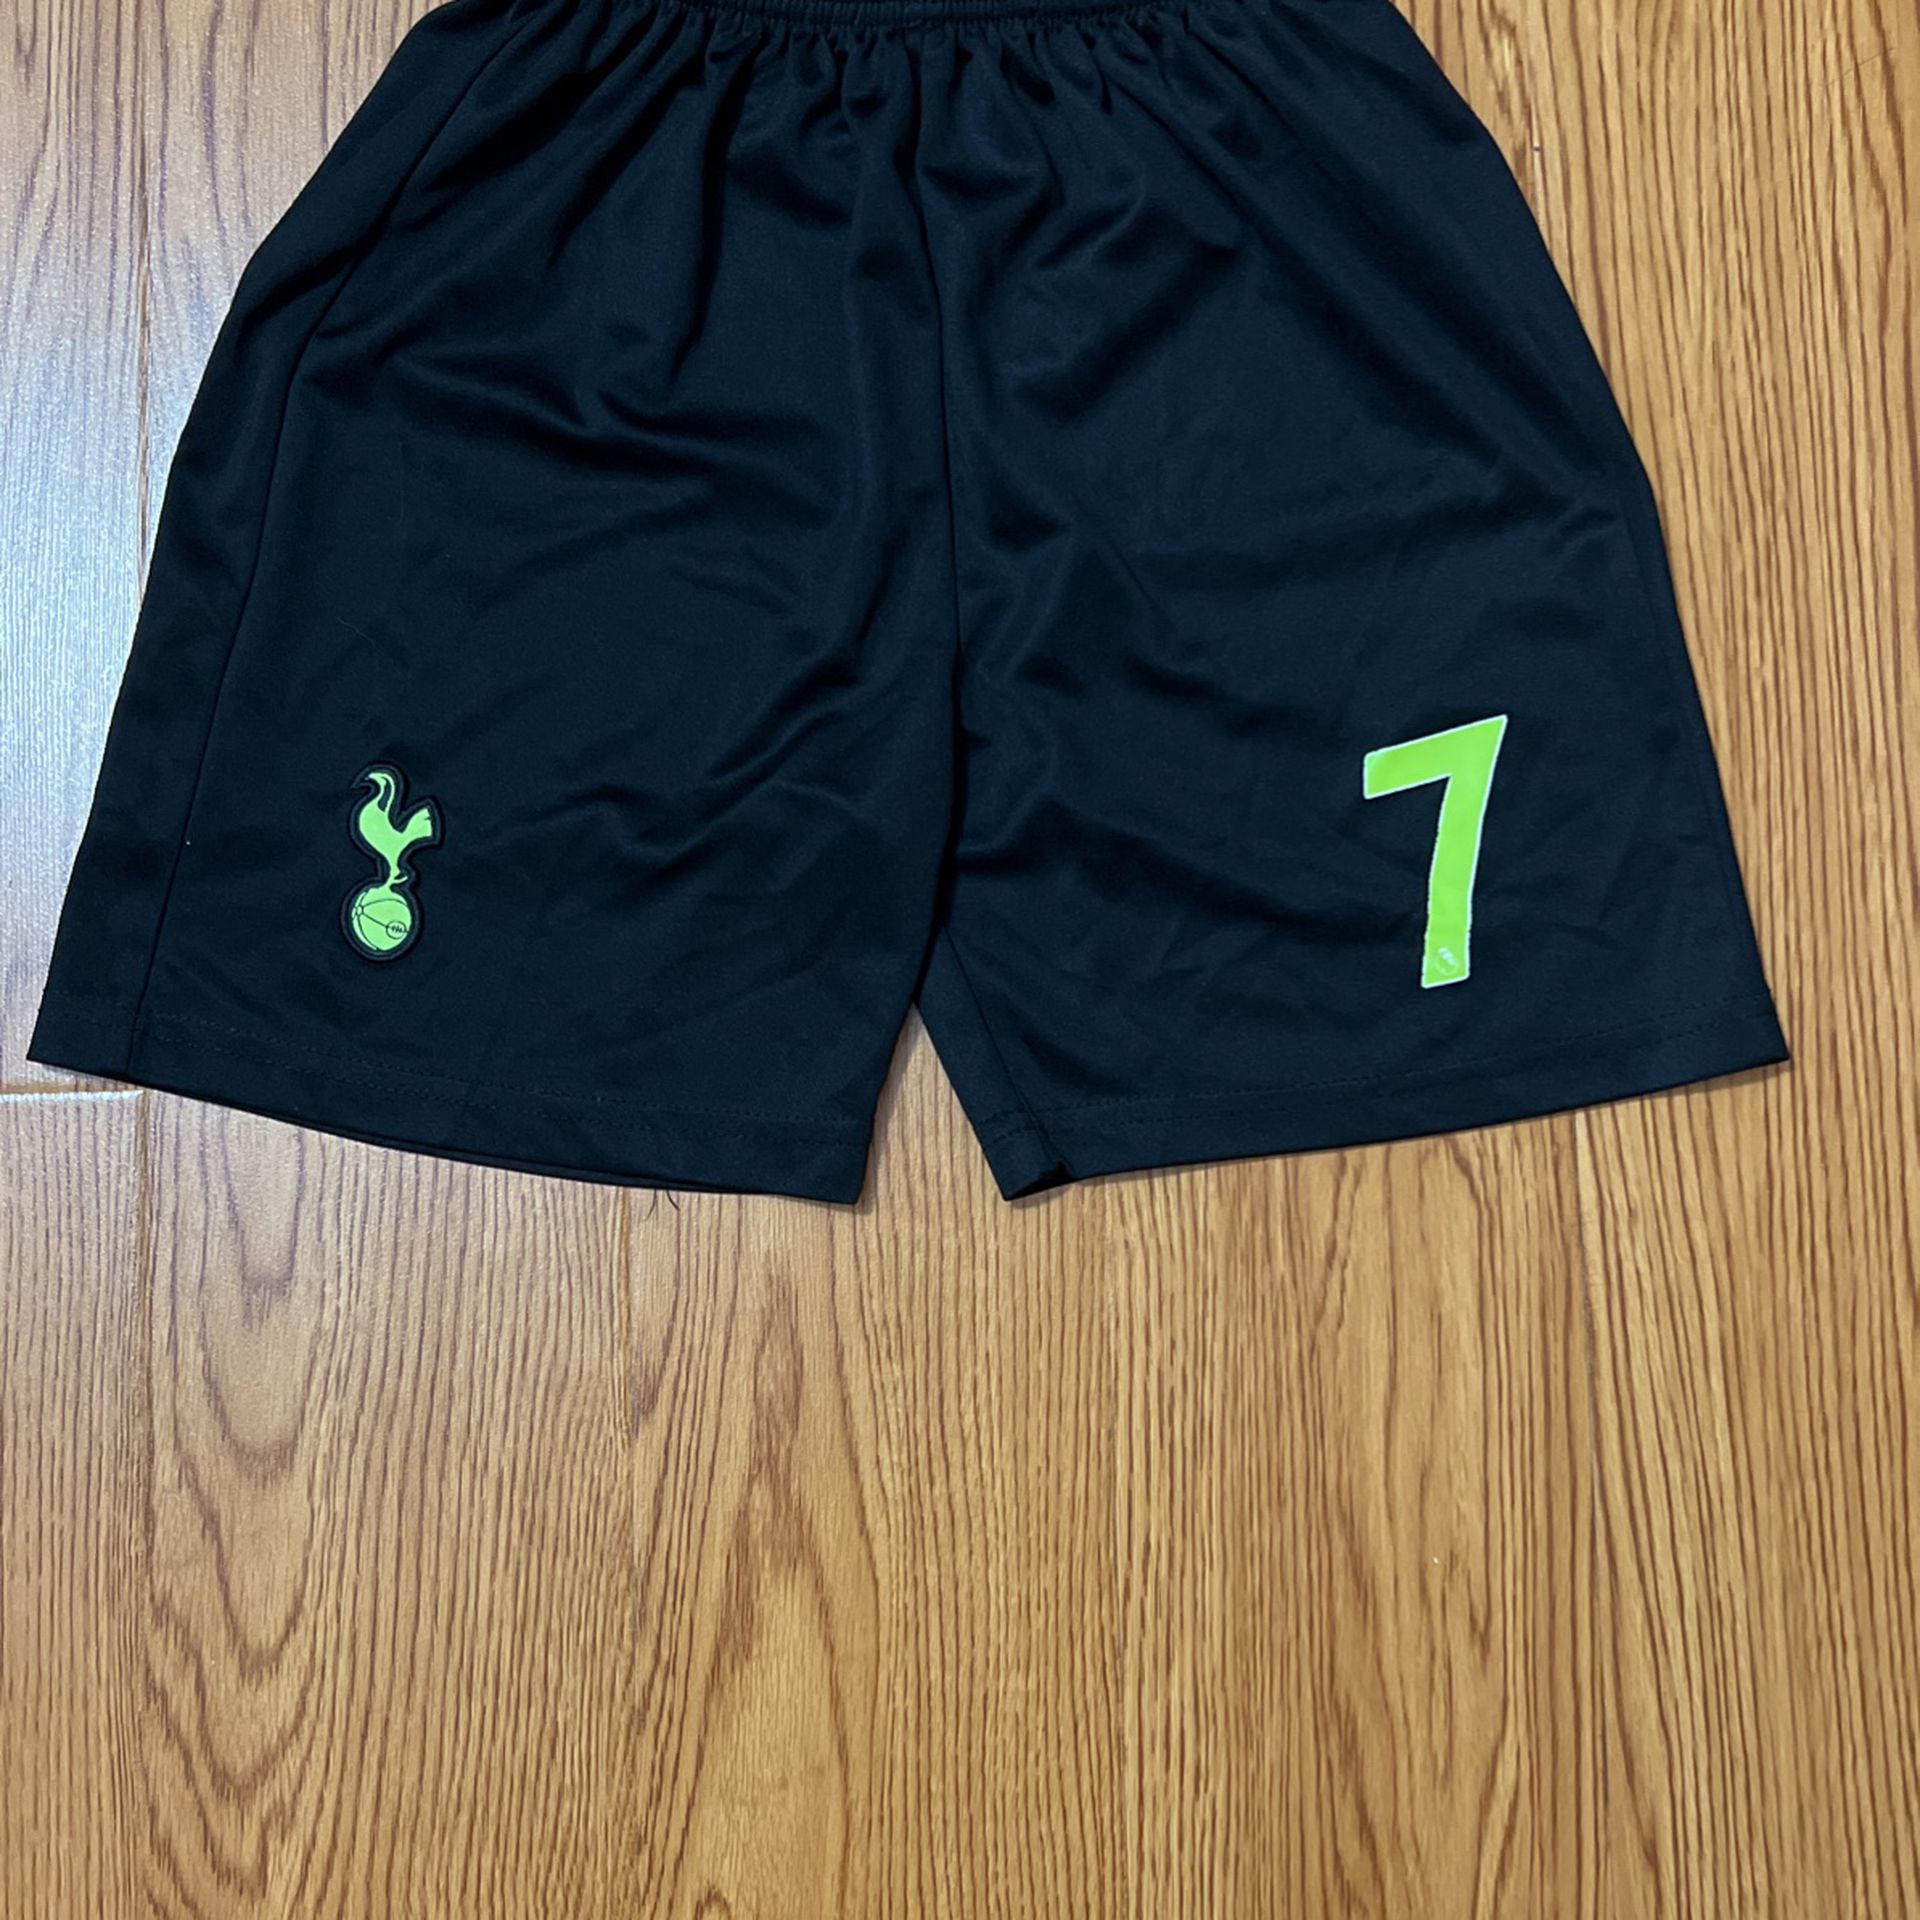 Nike Tottenham Hotspur Heung-Min Son 21/22 Third Jersey for Sale in  Tonawanda, NY - OfferUp